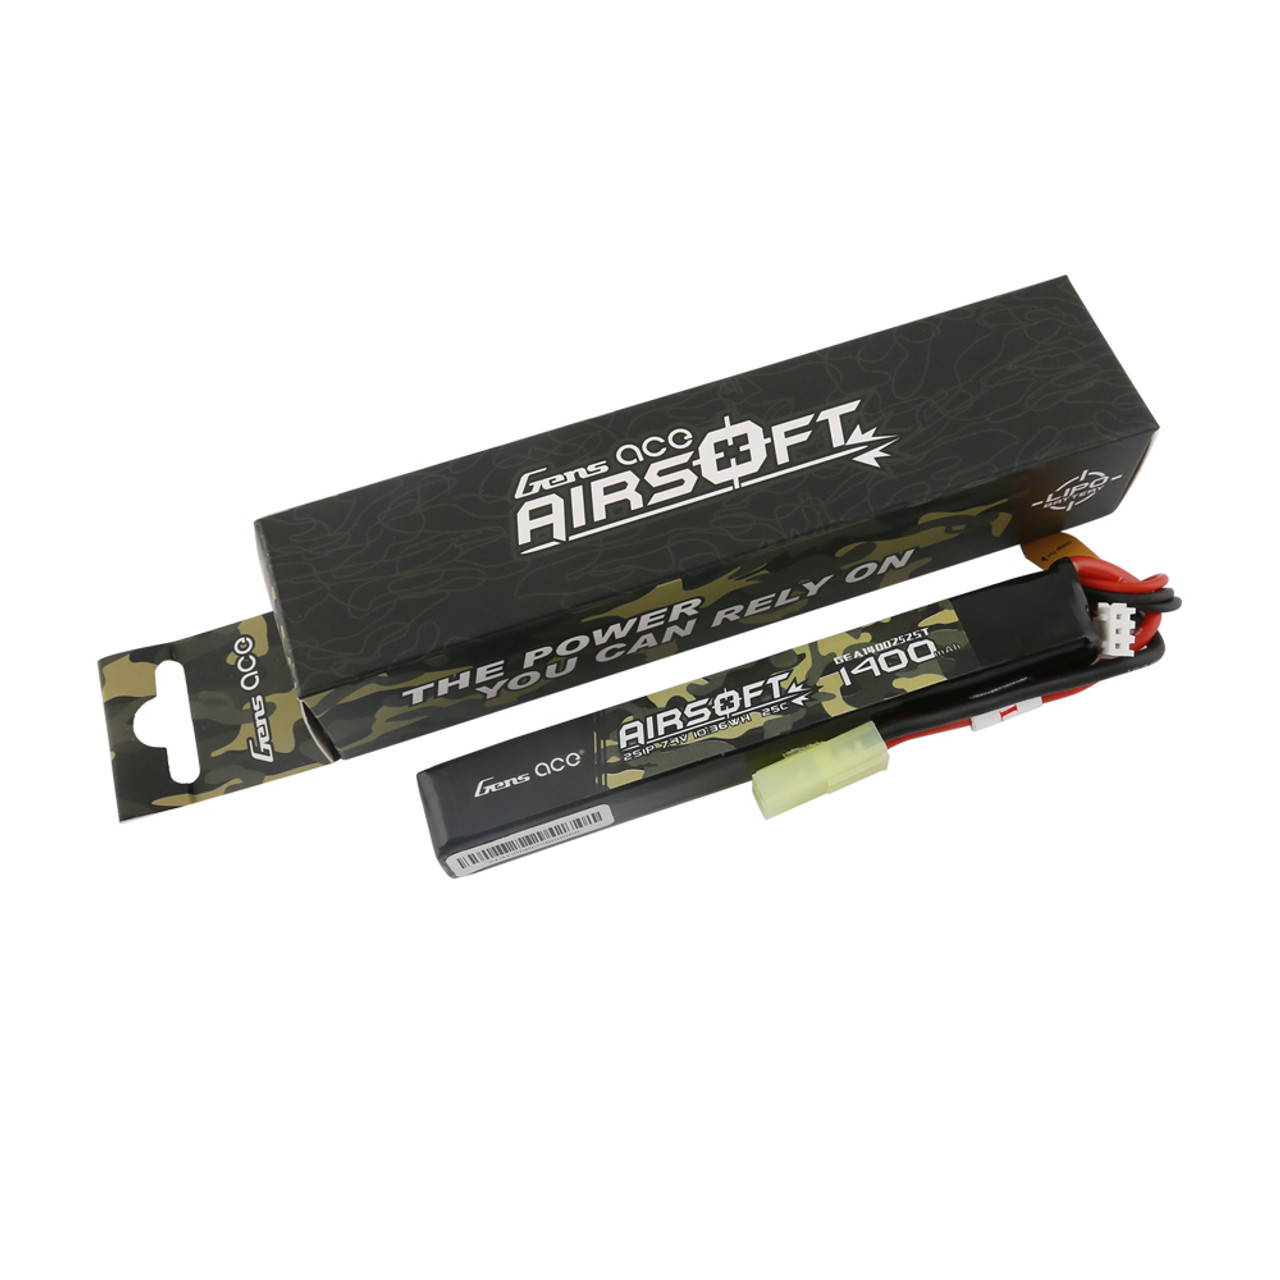 BO ENERGY - Batterie LiPo 7,4v 1800mAh 25C, 1 Stick, Tamiya - Safe Zone  Airsoft